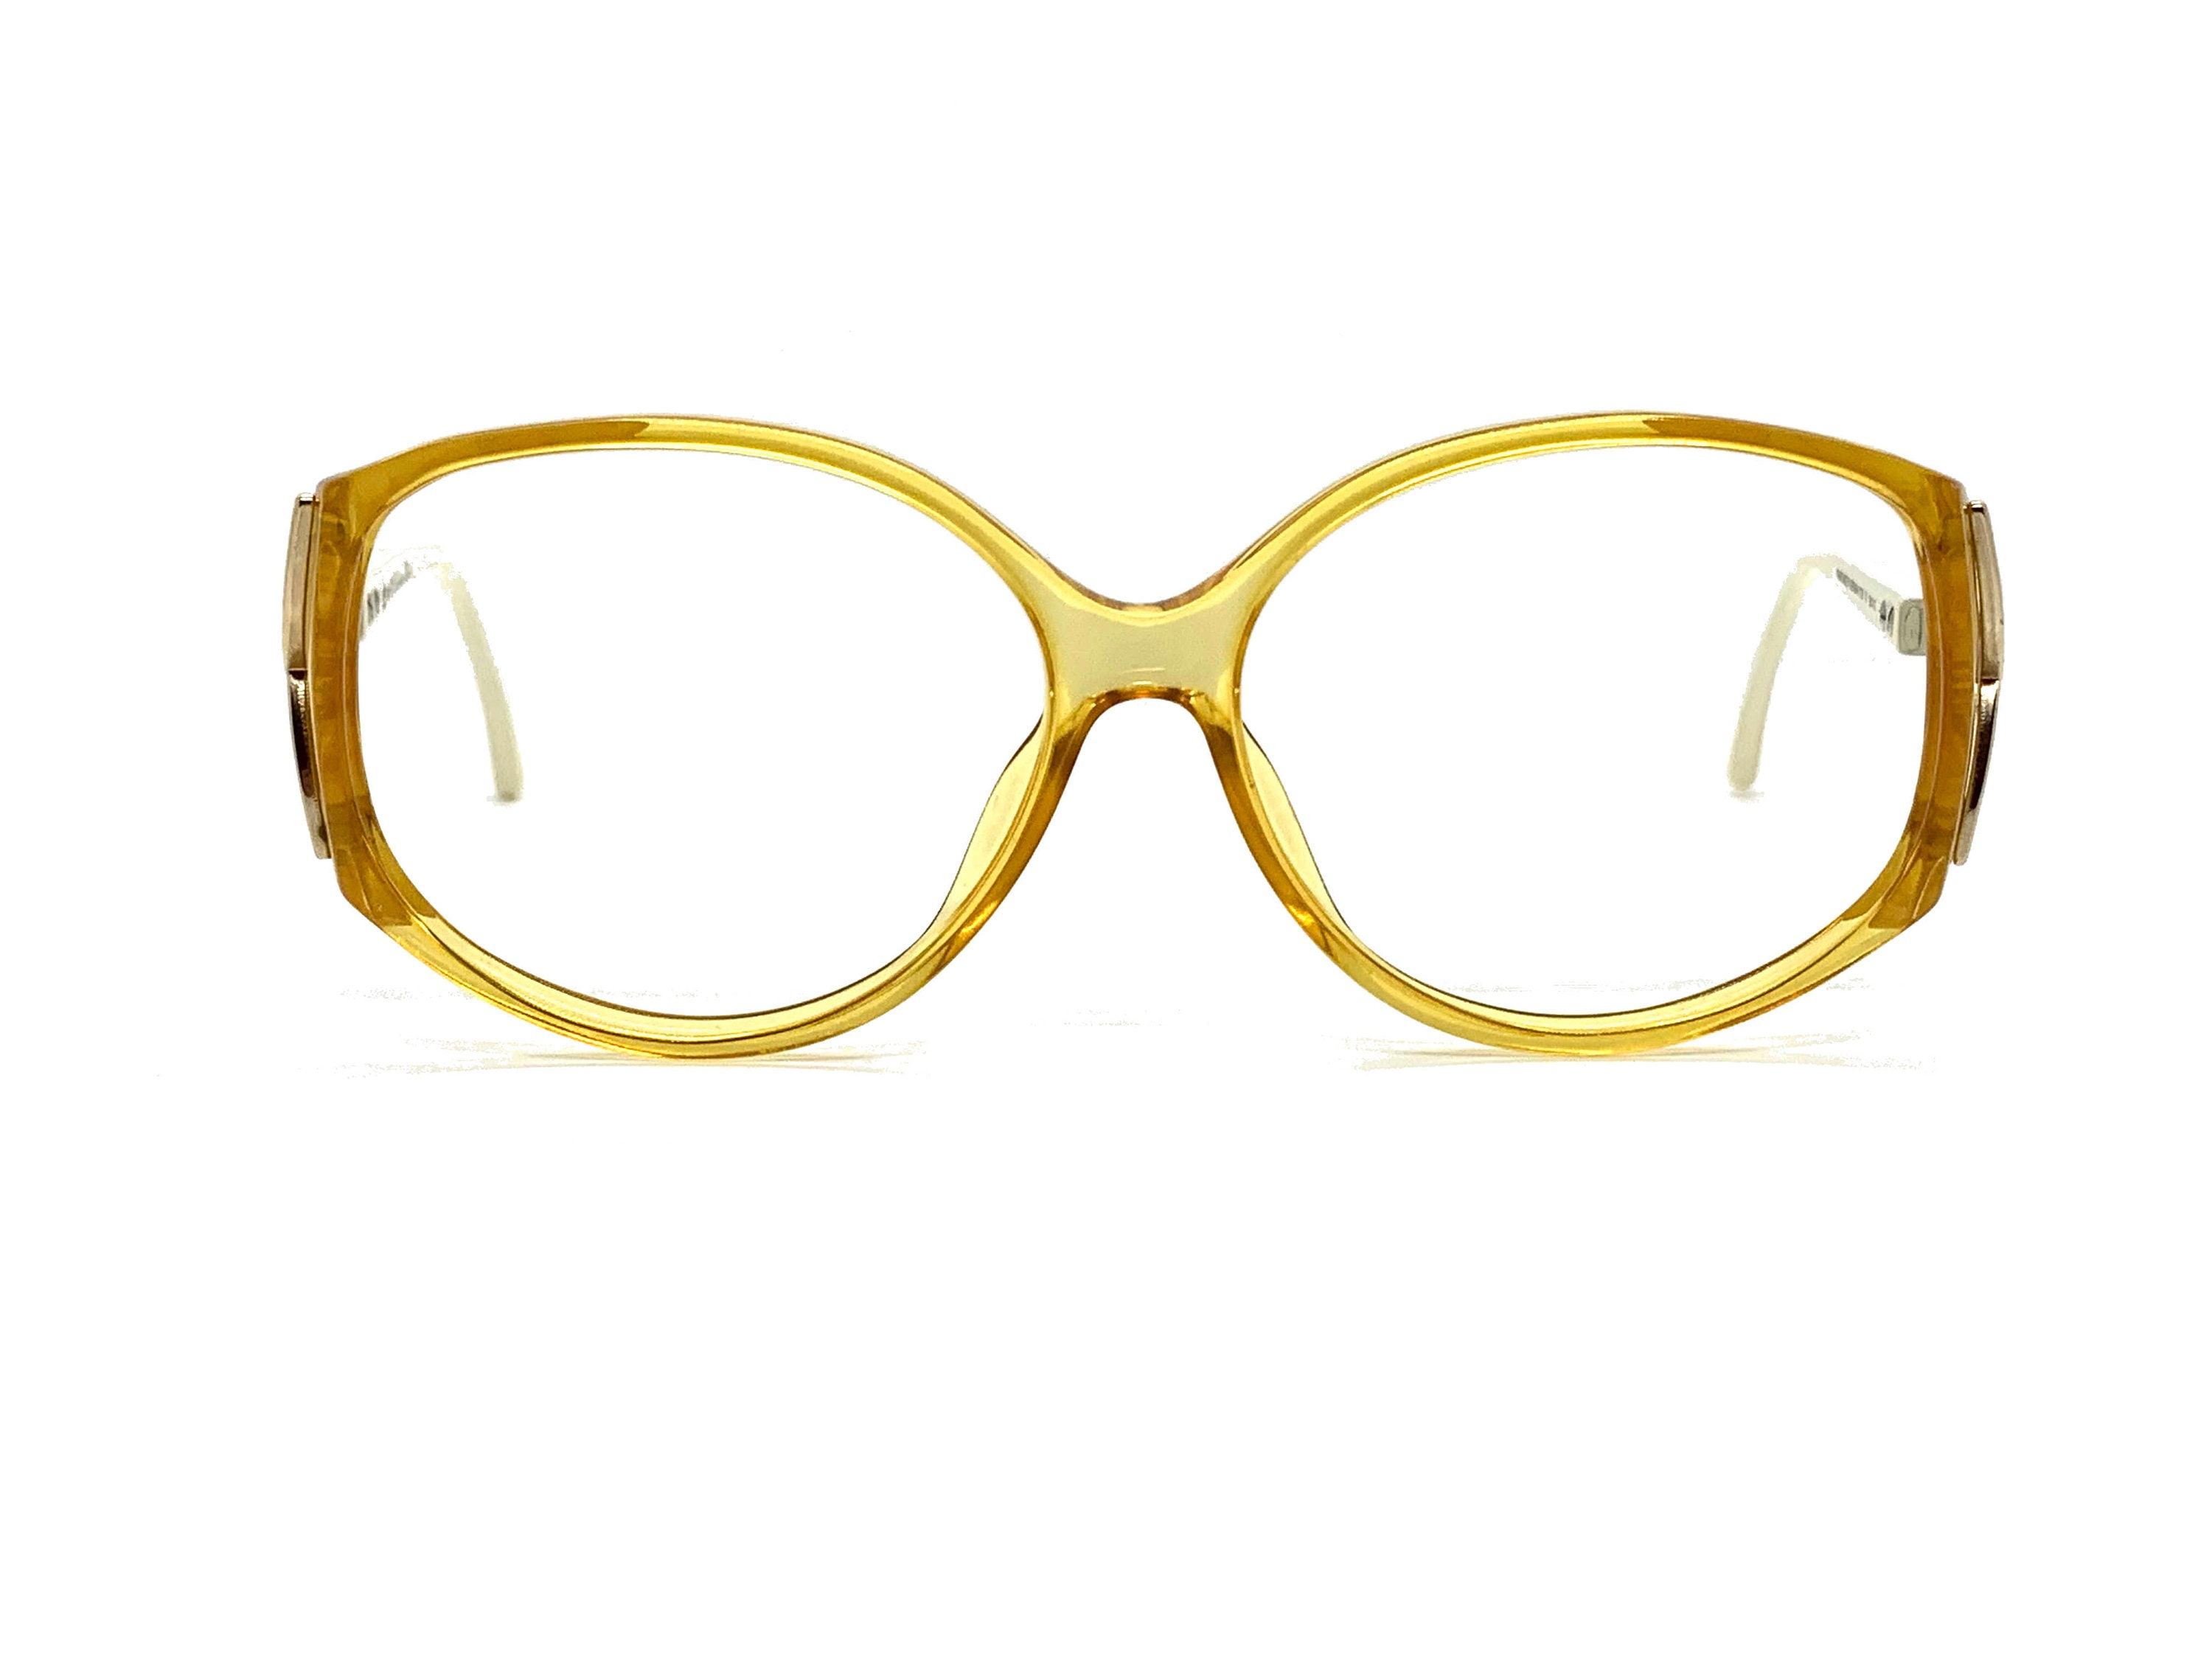 Christian Dior Brille - Vintage, 80er Jahre, gelb-goldener Rahmen